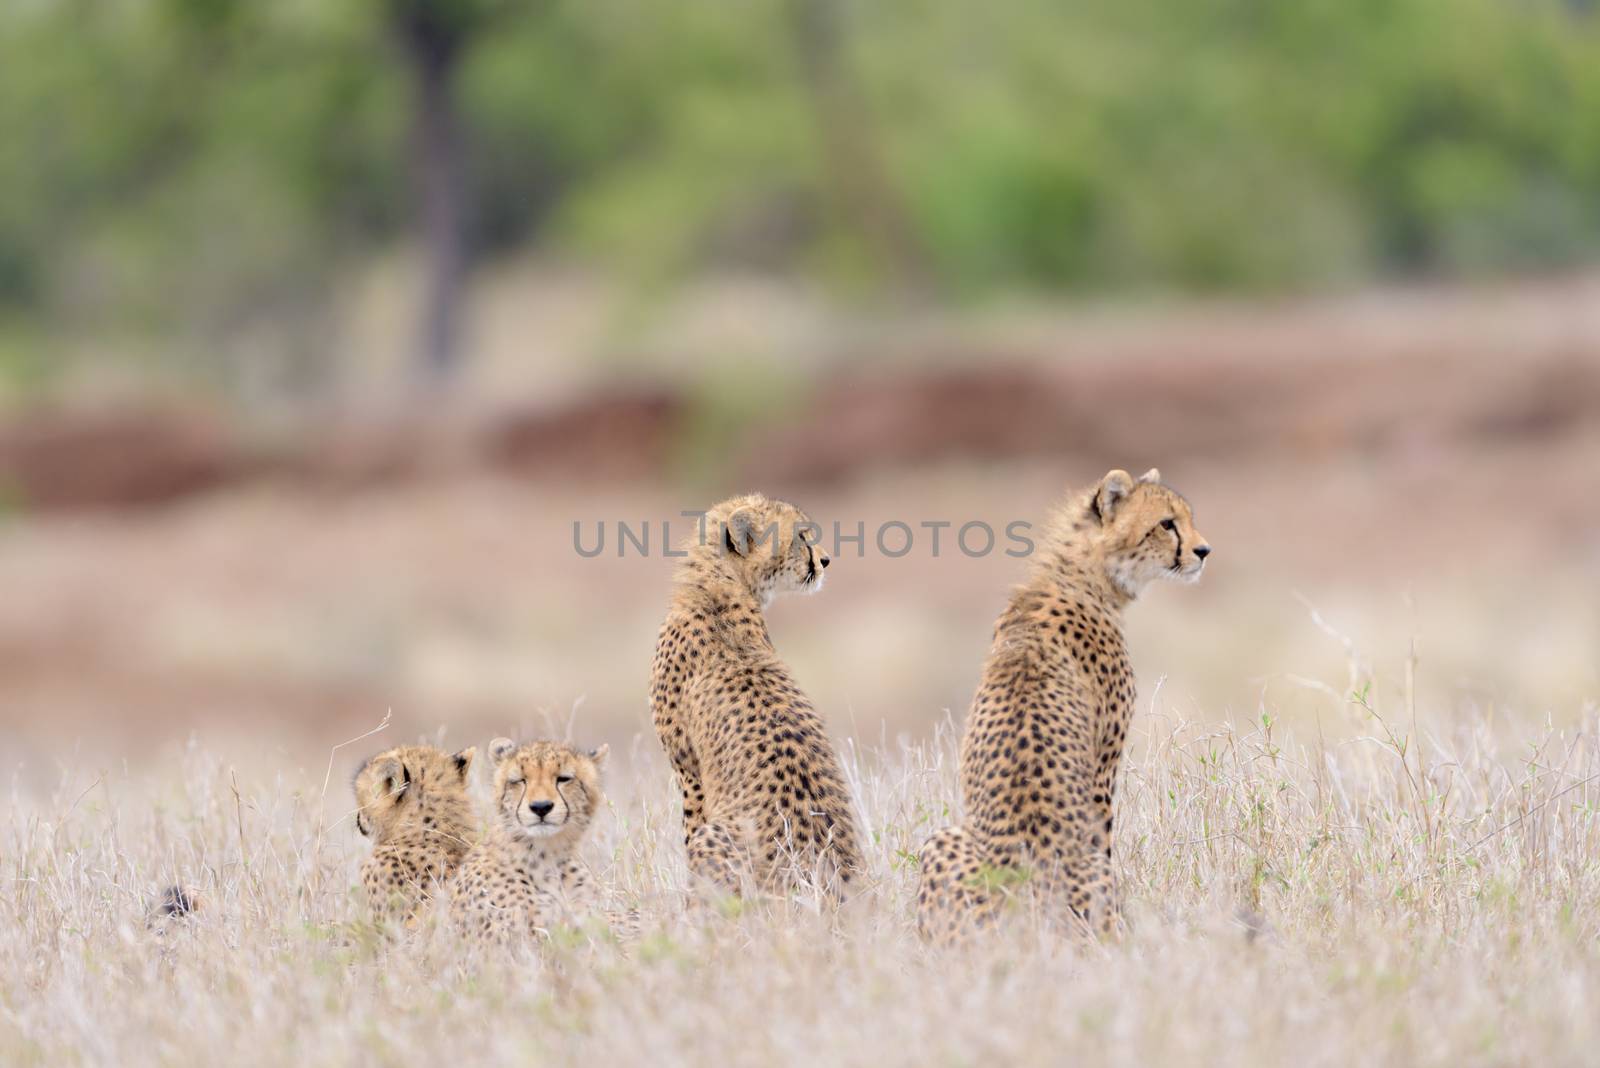 Cheetah family portrait by ozkanzozmen